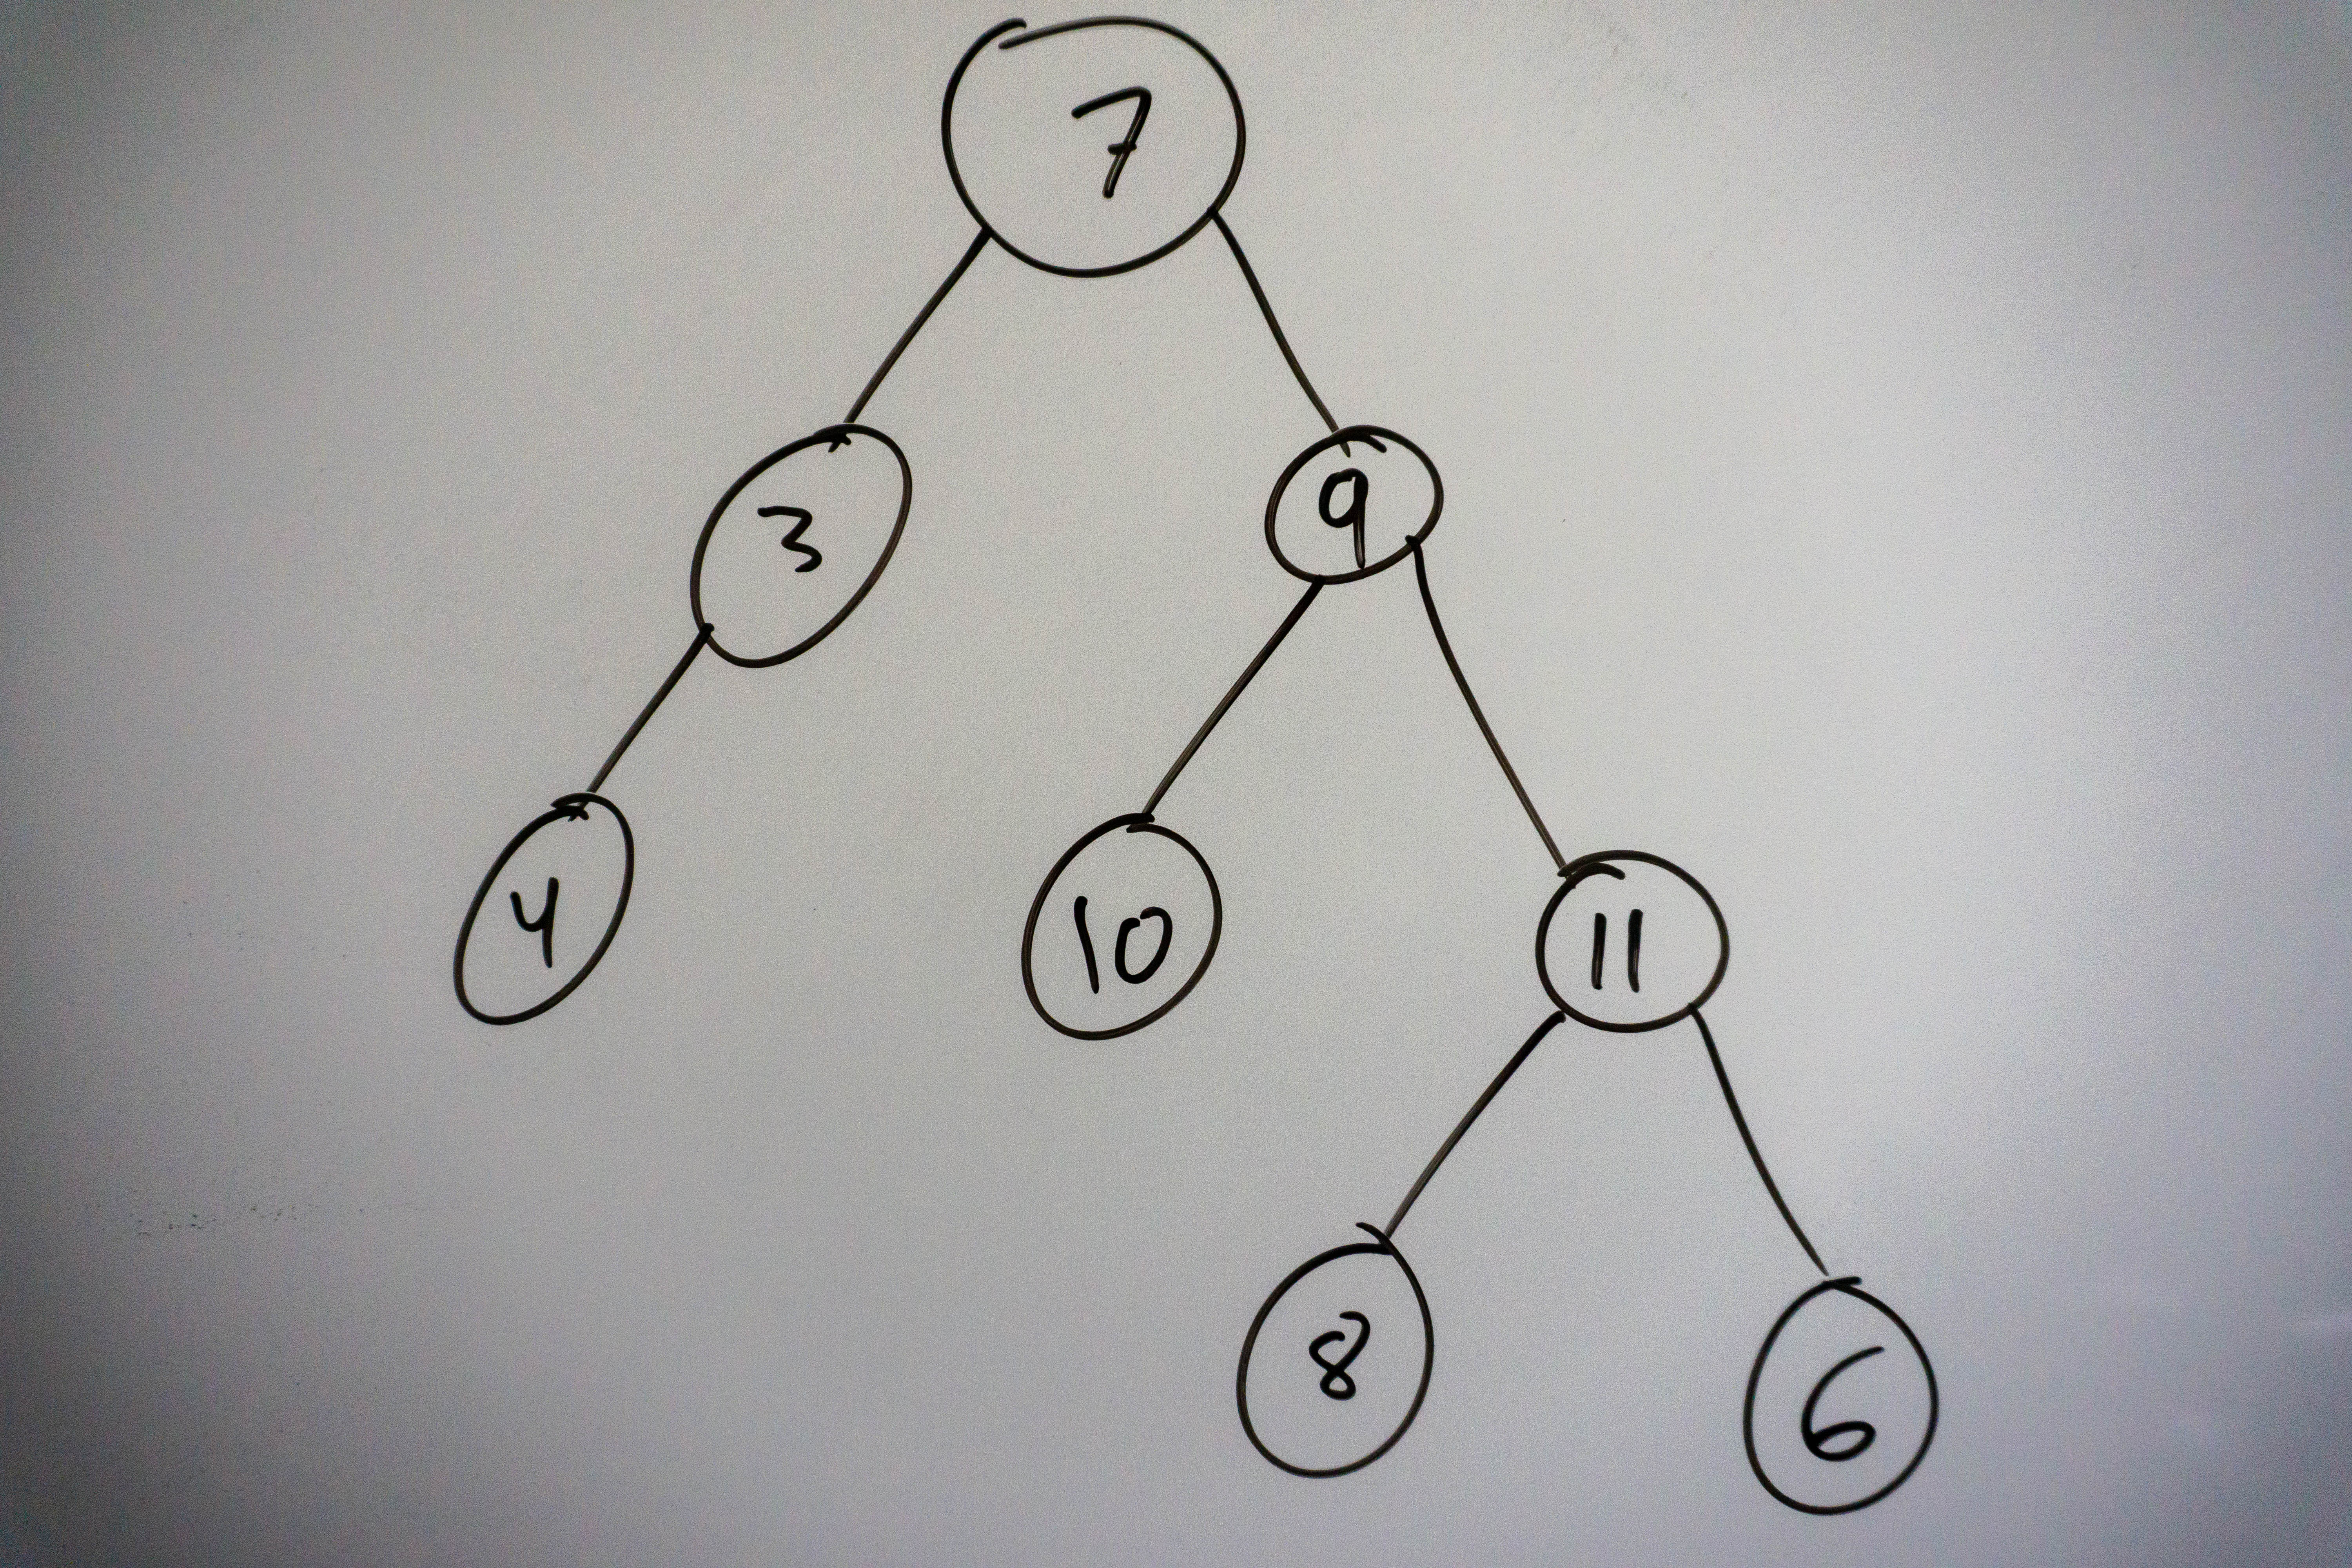 Binary Tree Traversal